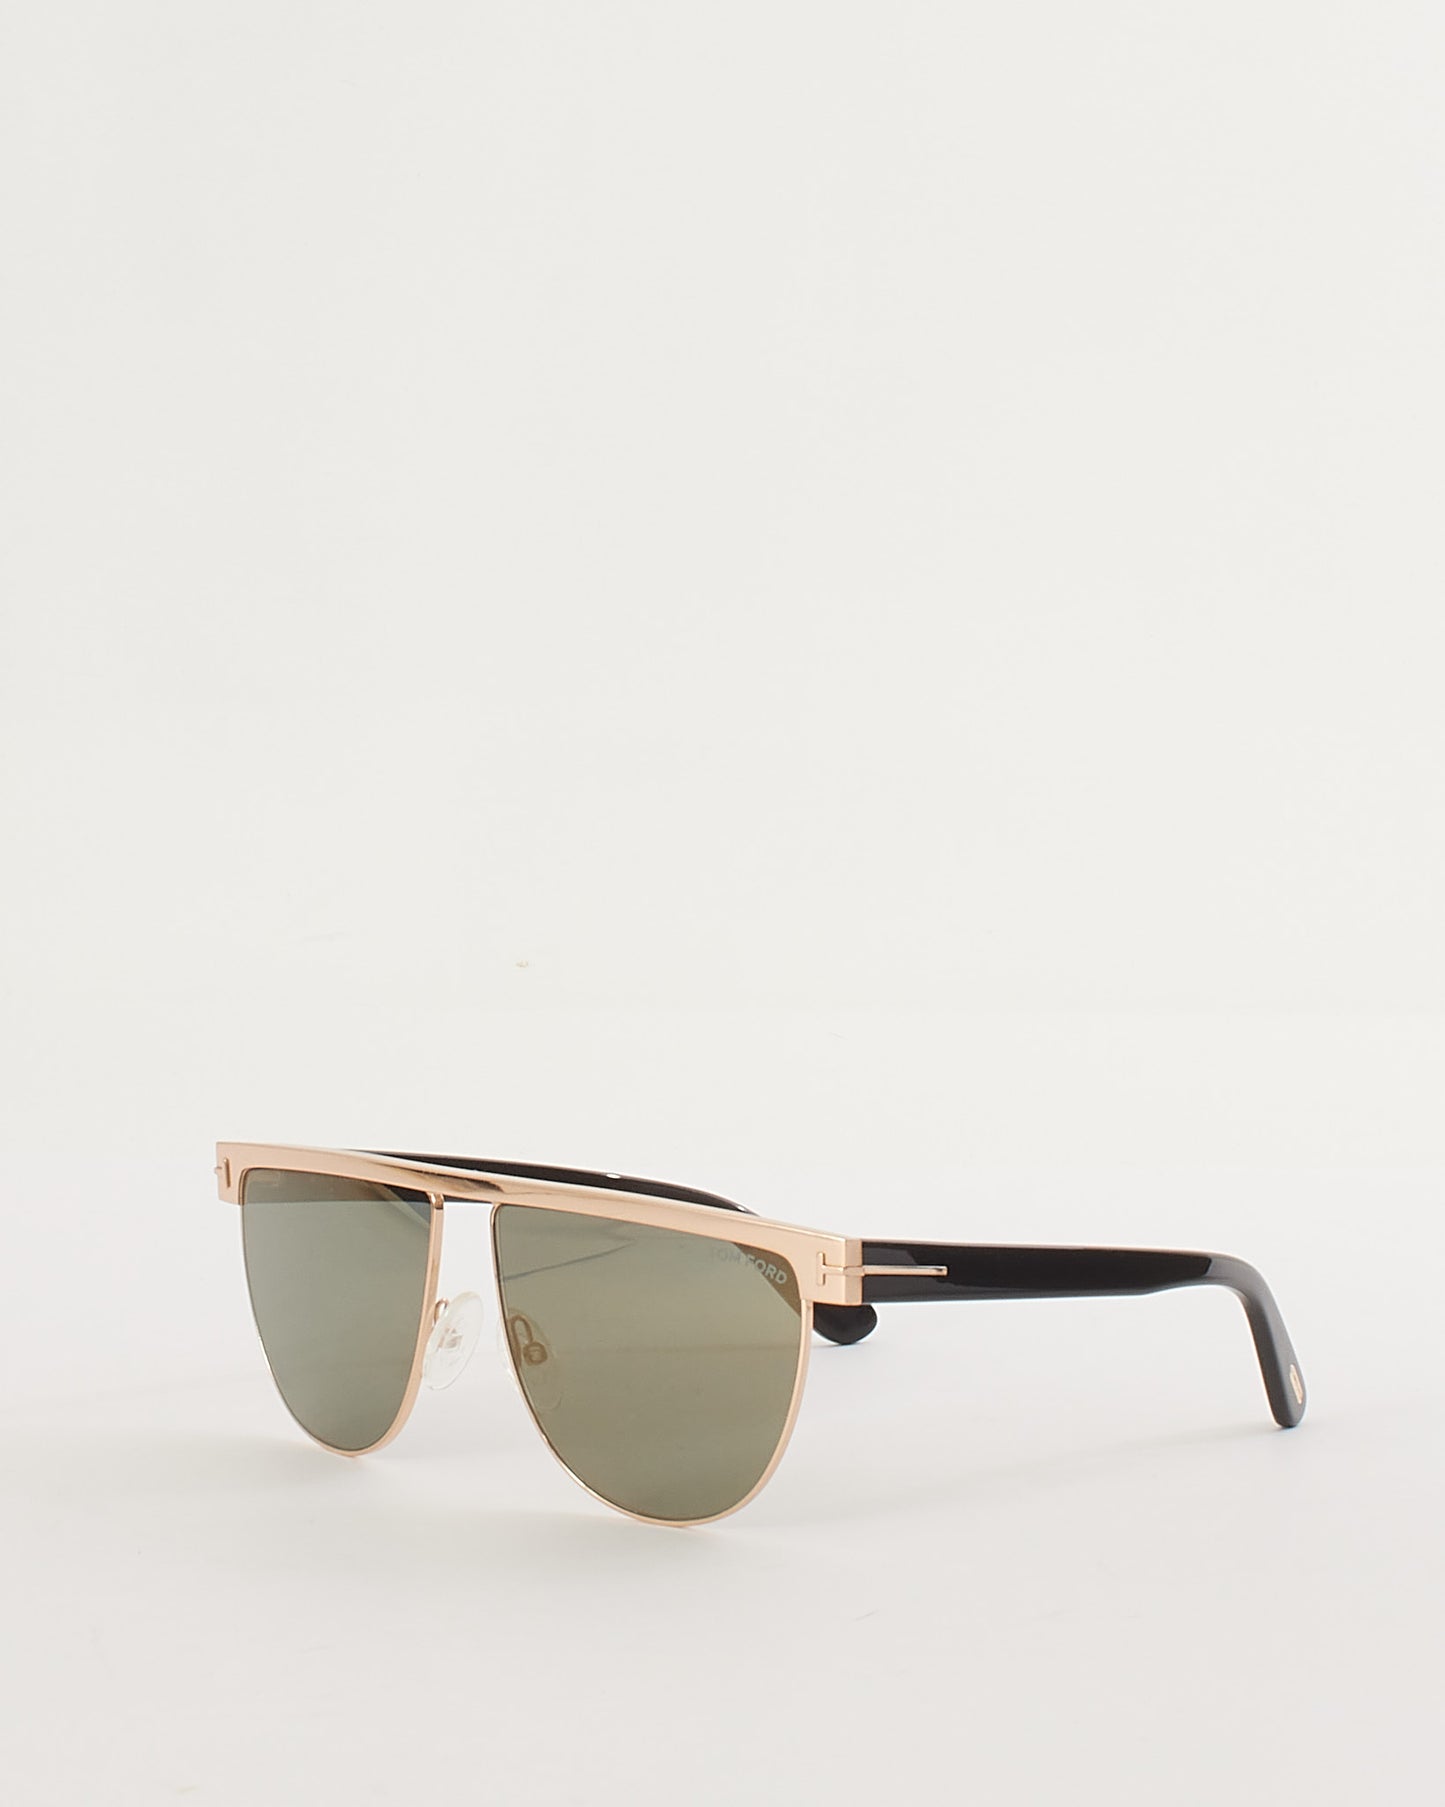 Tom Ford Rose Gold / Black Smoke Mirrored Stephanie FT0570 Sunglasses